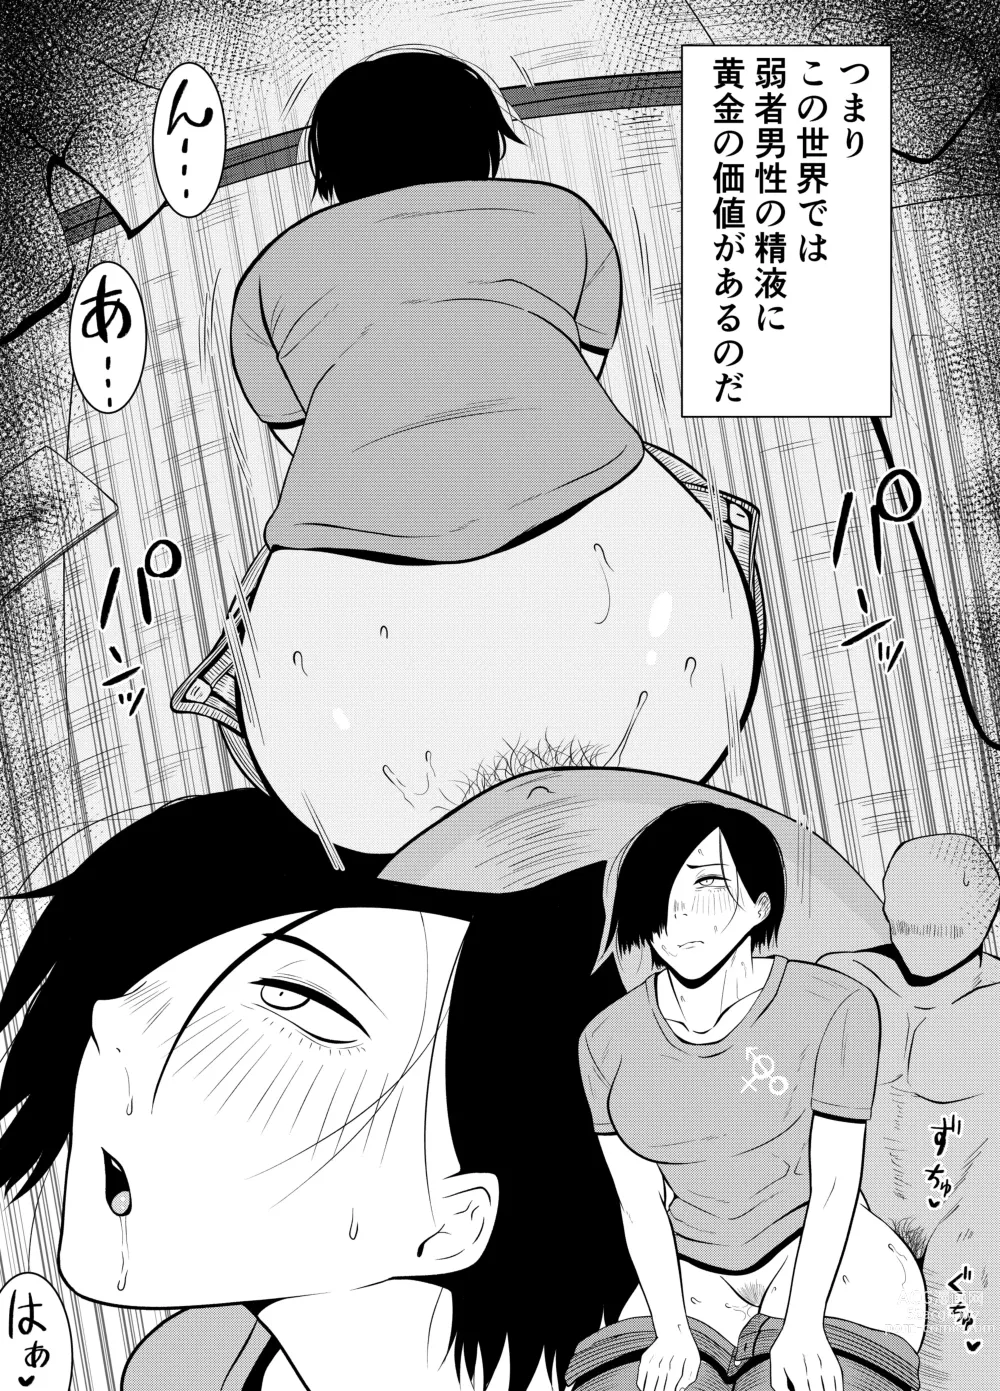 Page 4 of doujinshi Jakushadansei 1: Bijo 9 no sekai